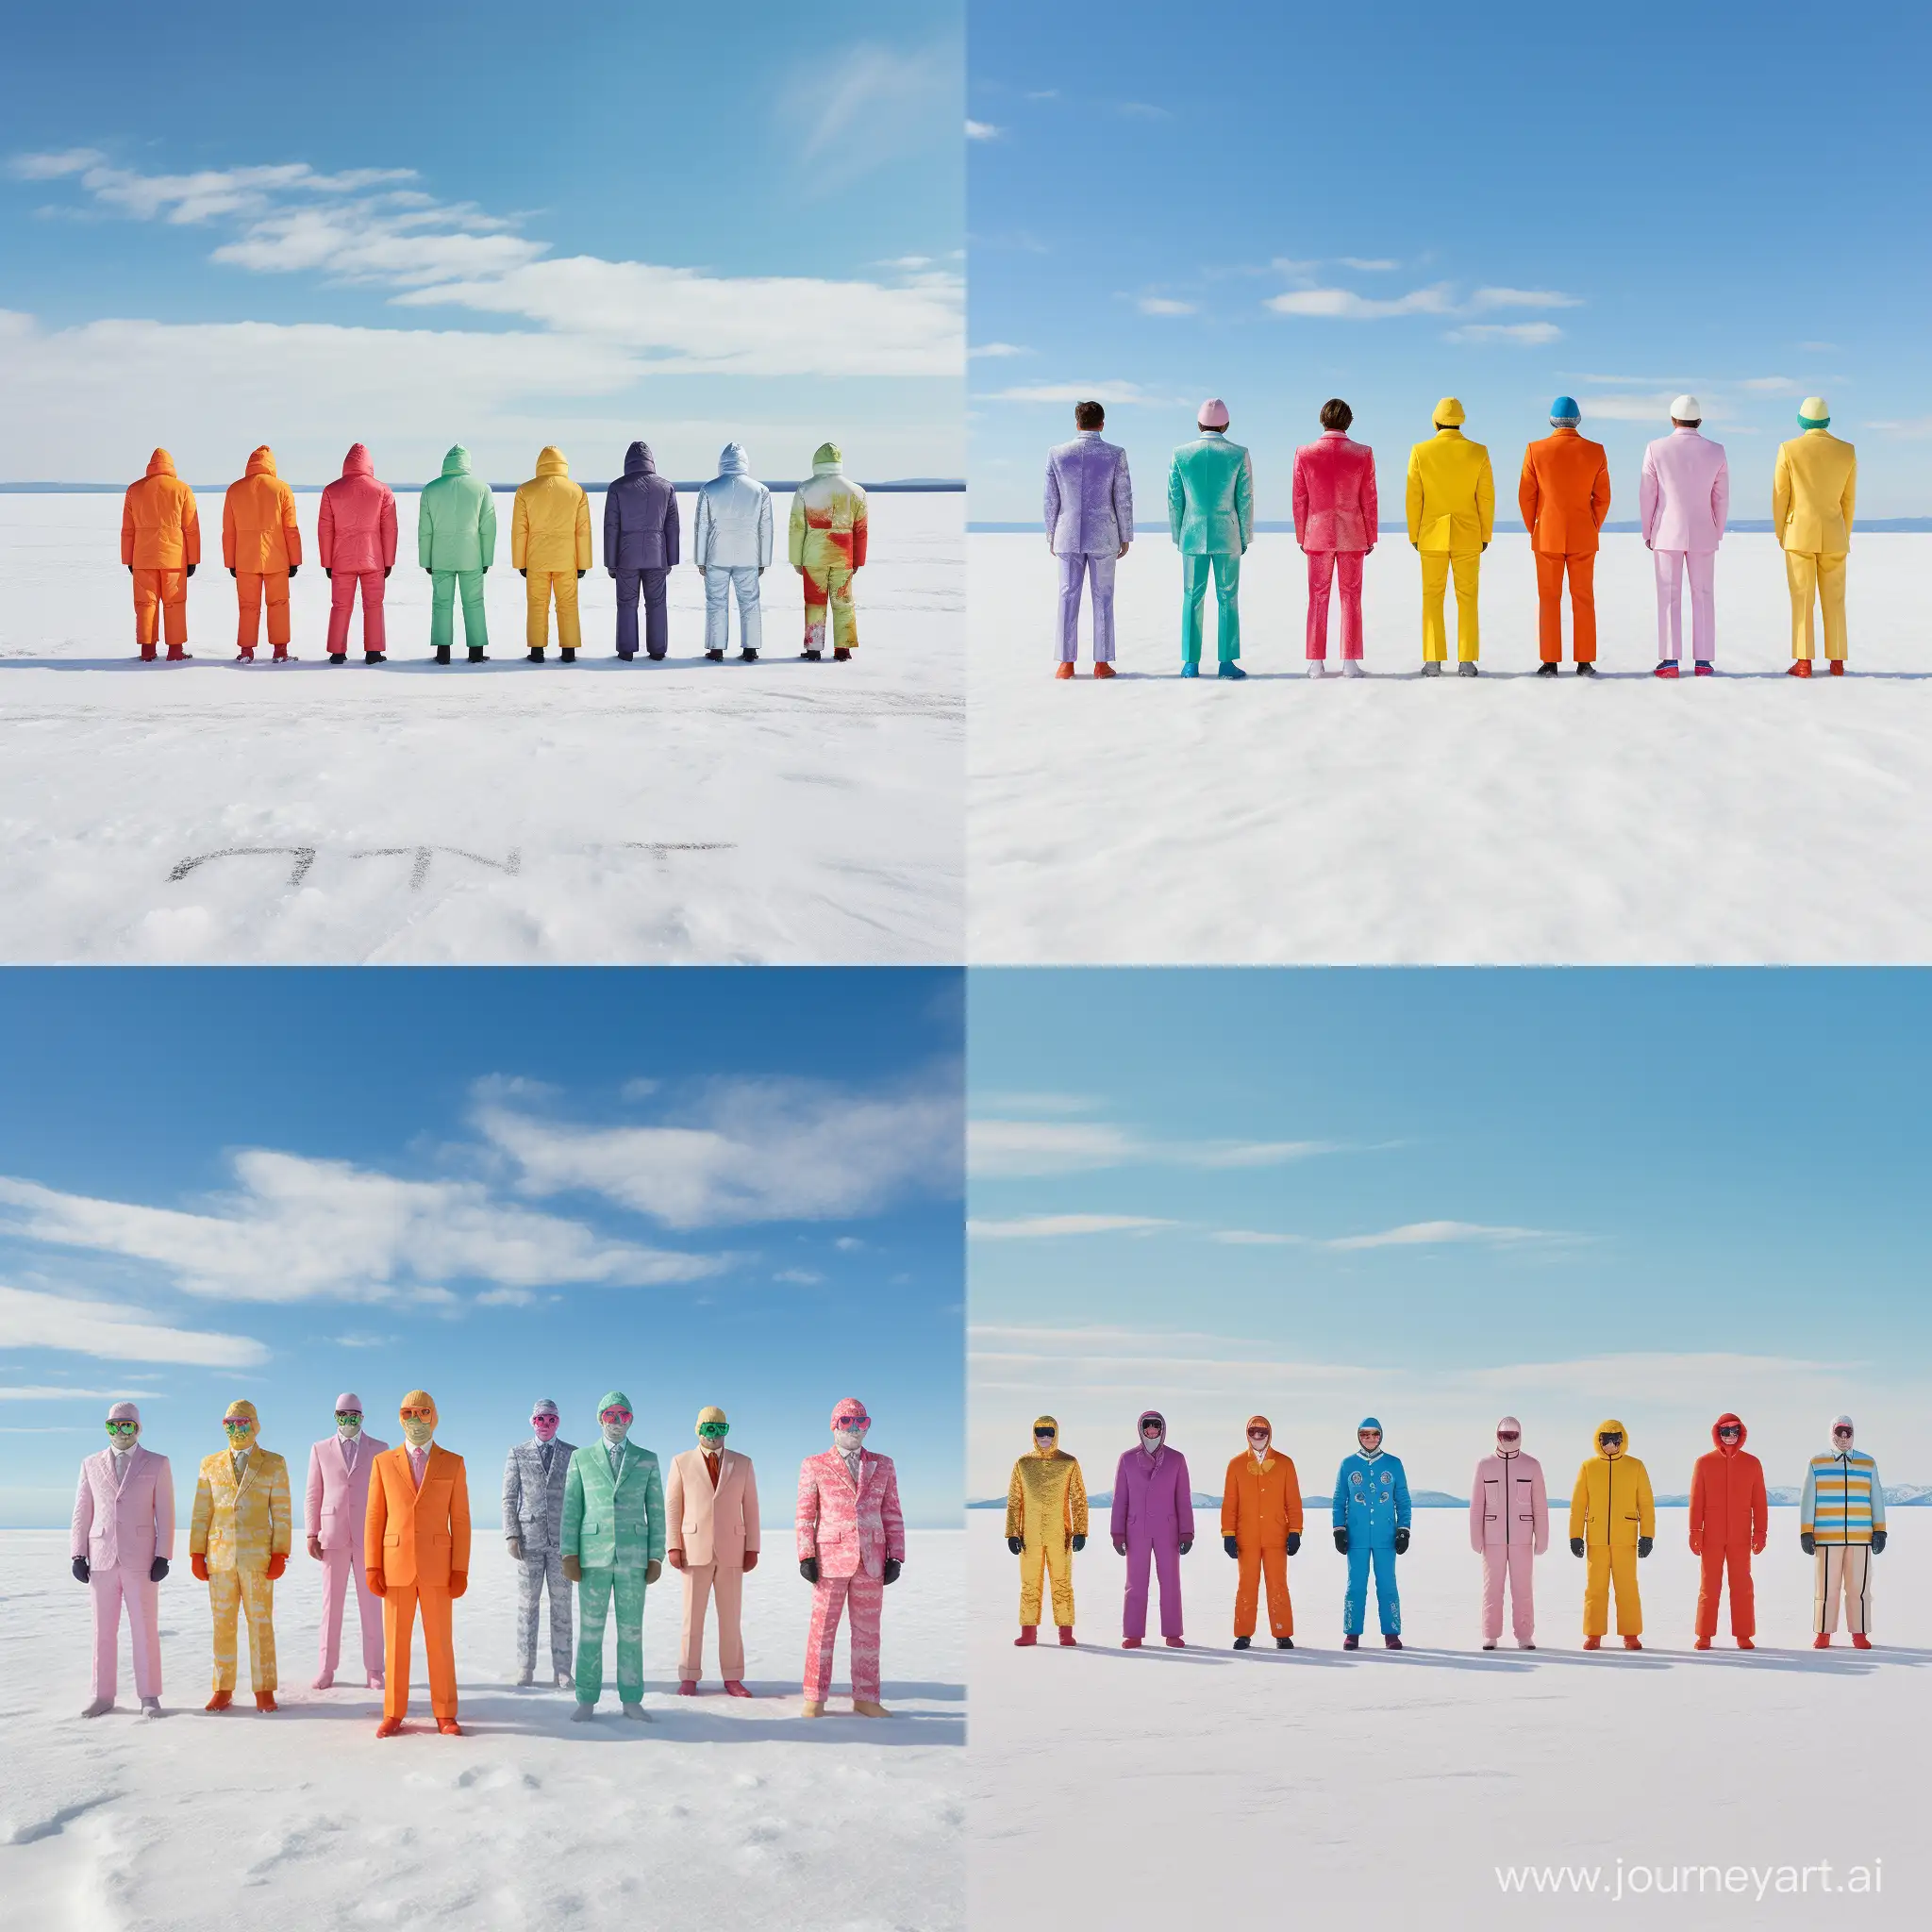 Colorful-Snowsuit-Group-in-Winter-Wonderland